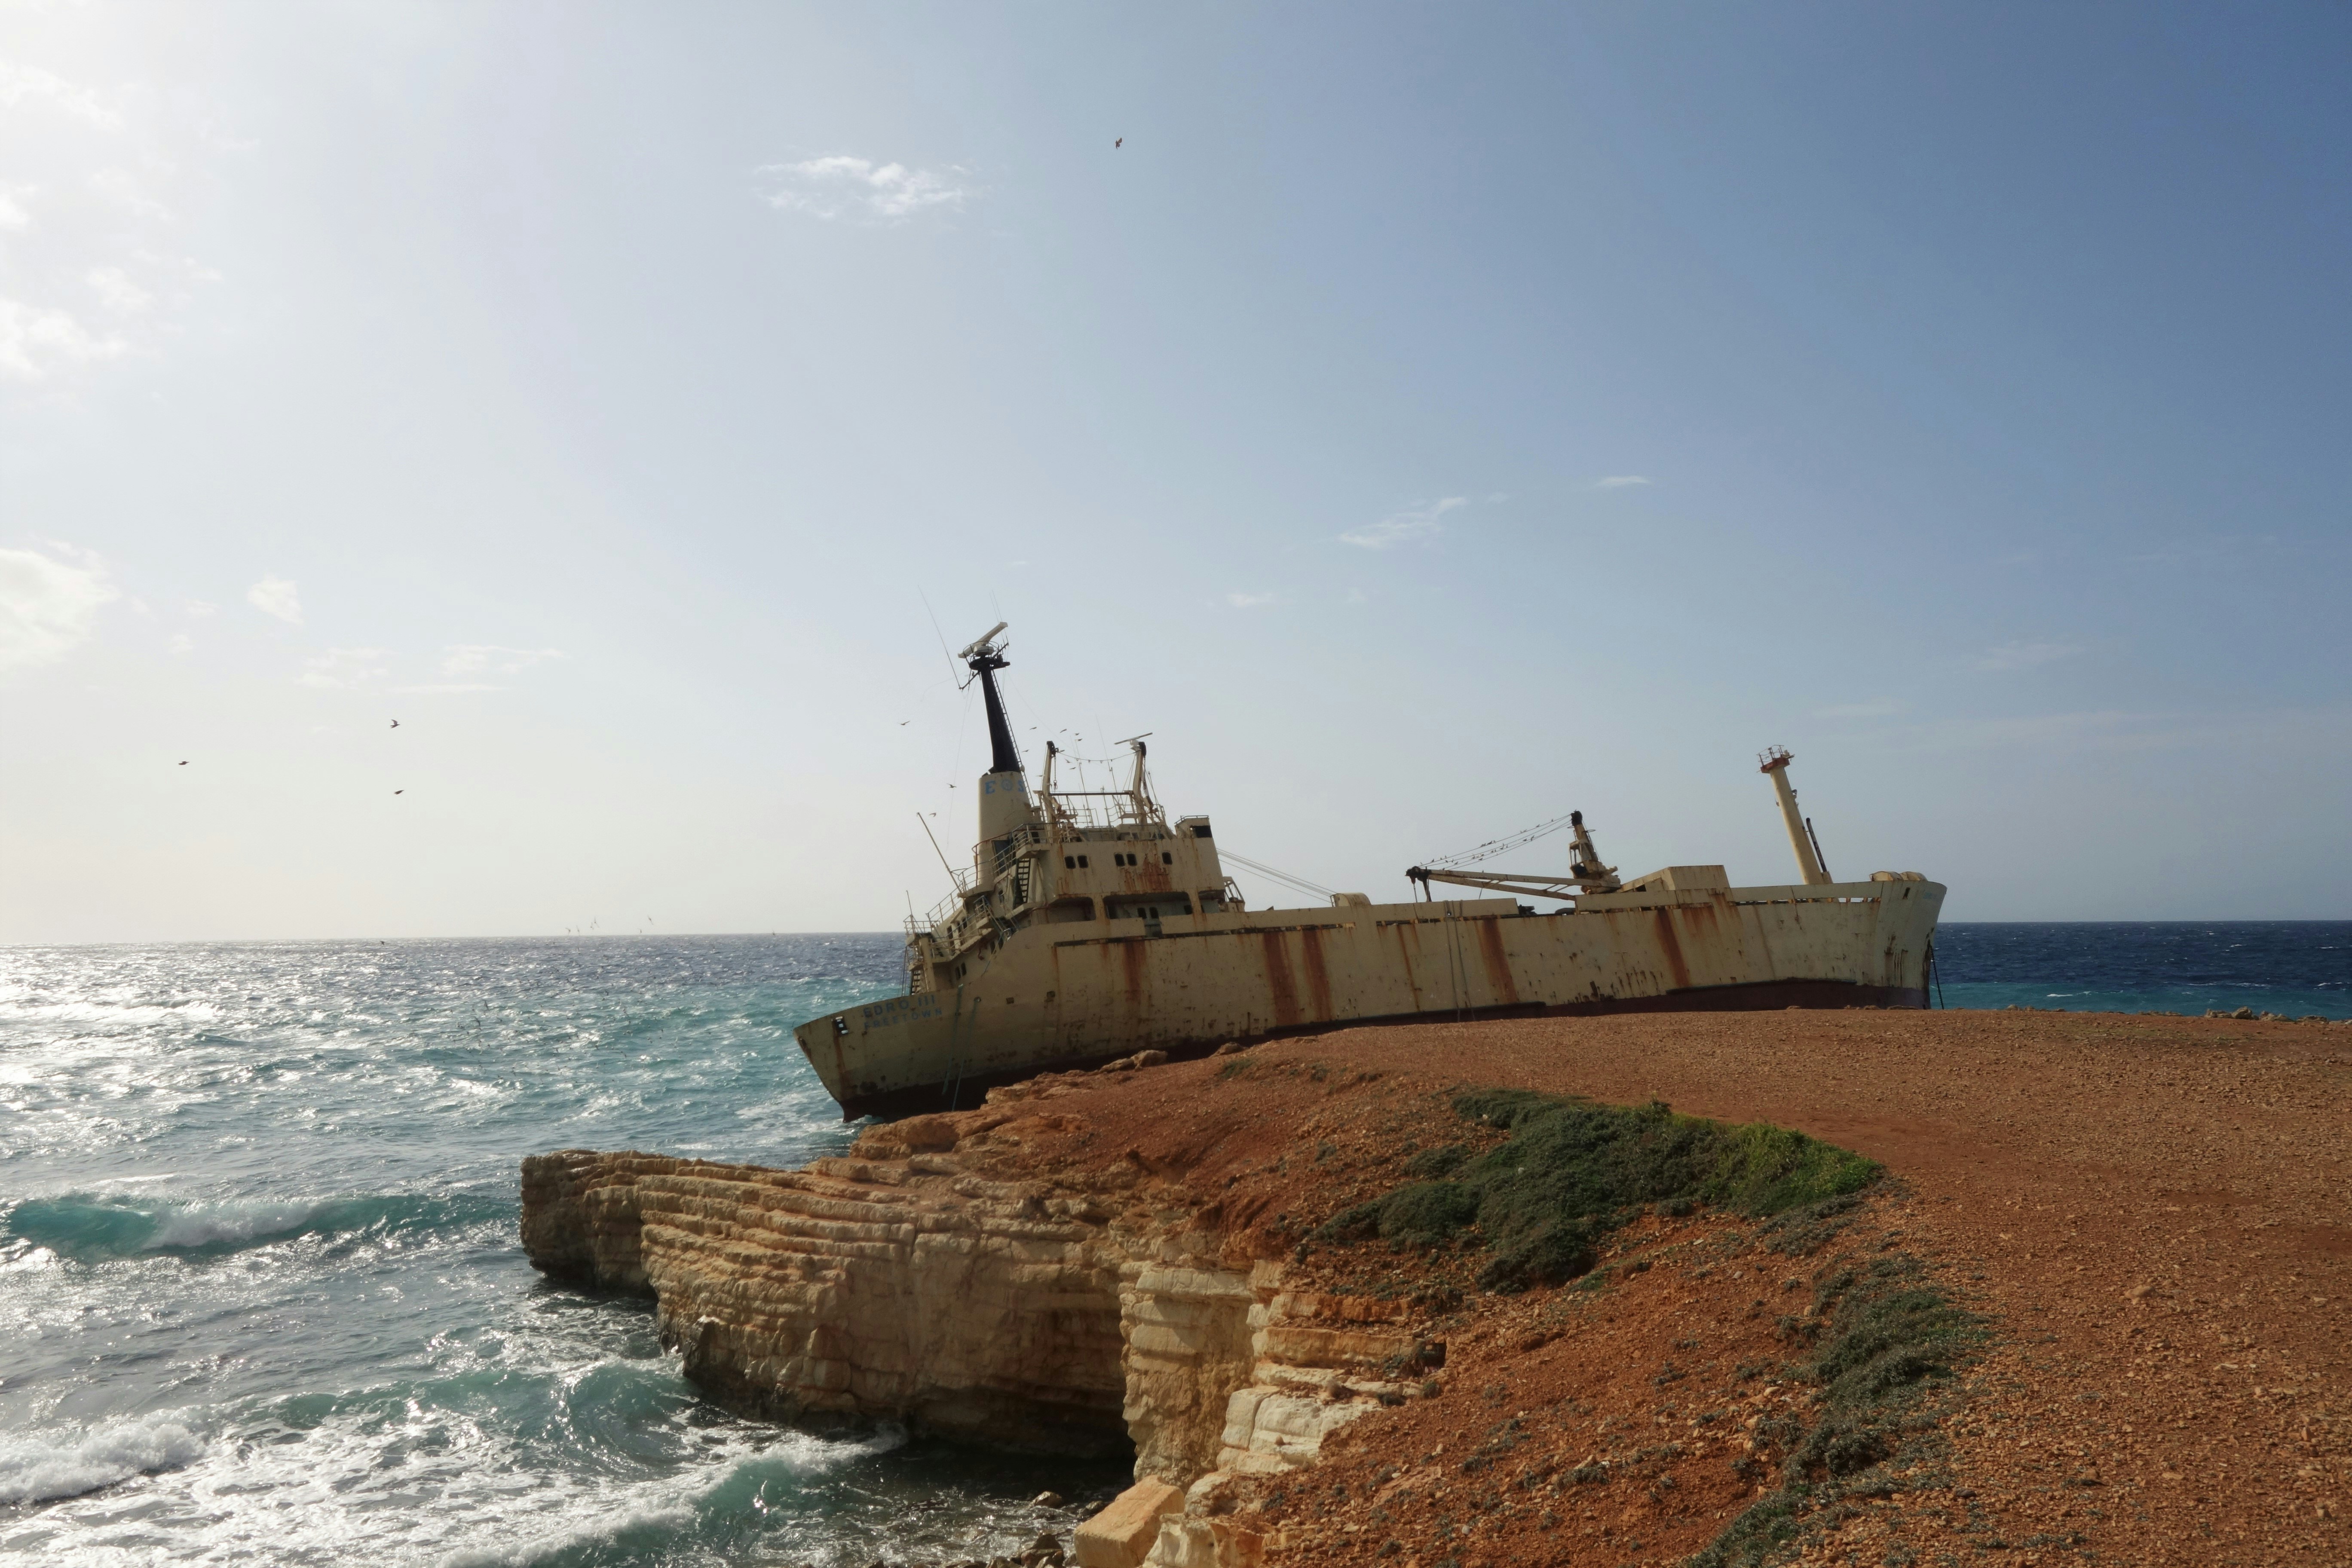 Shipwreck at the Cyprus shore